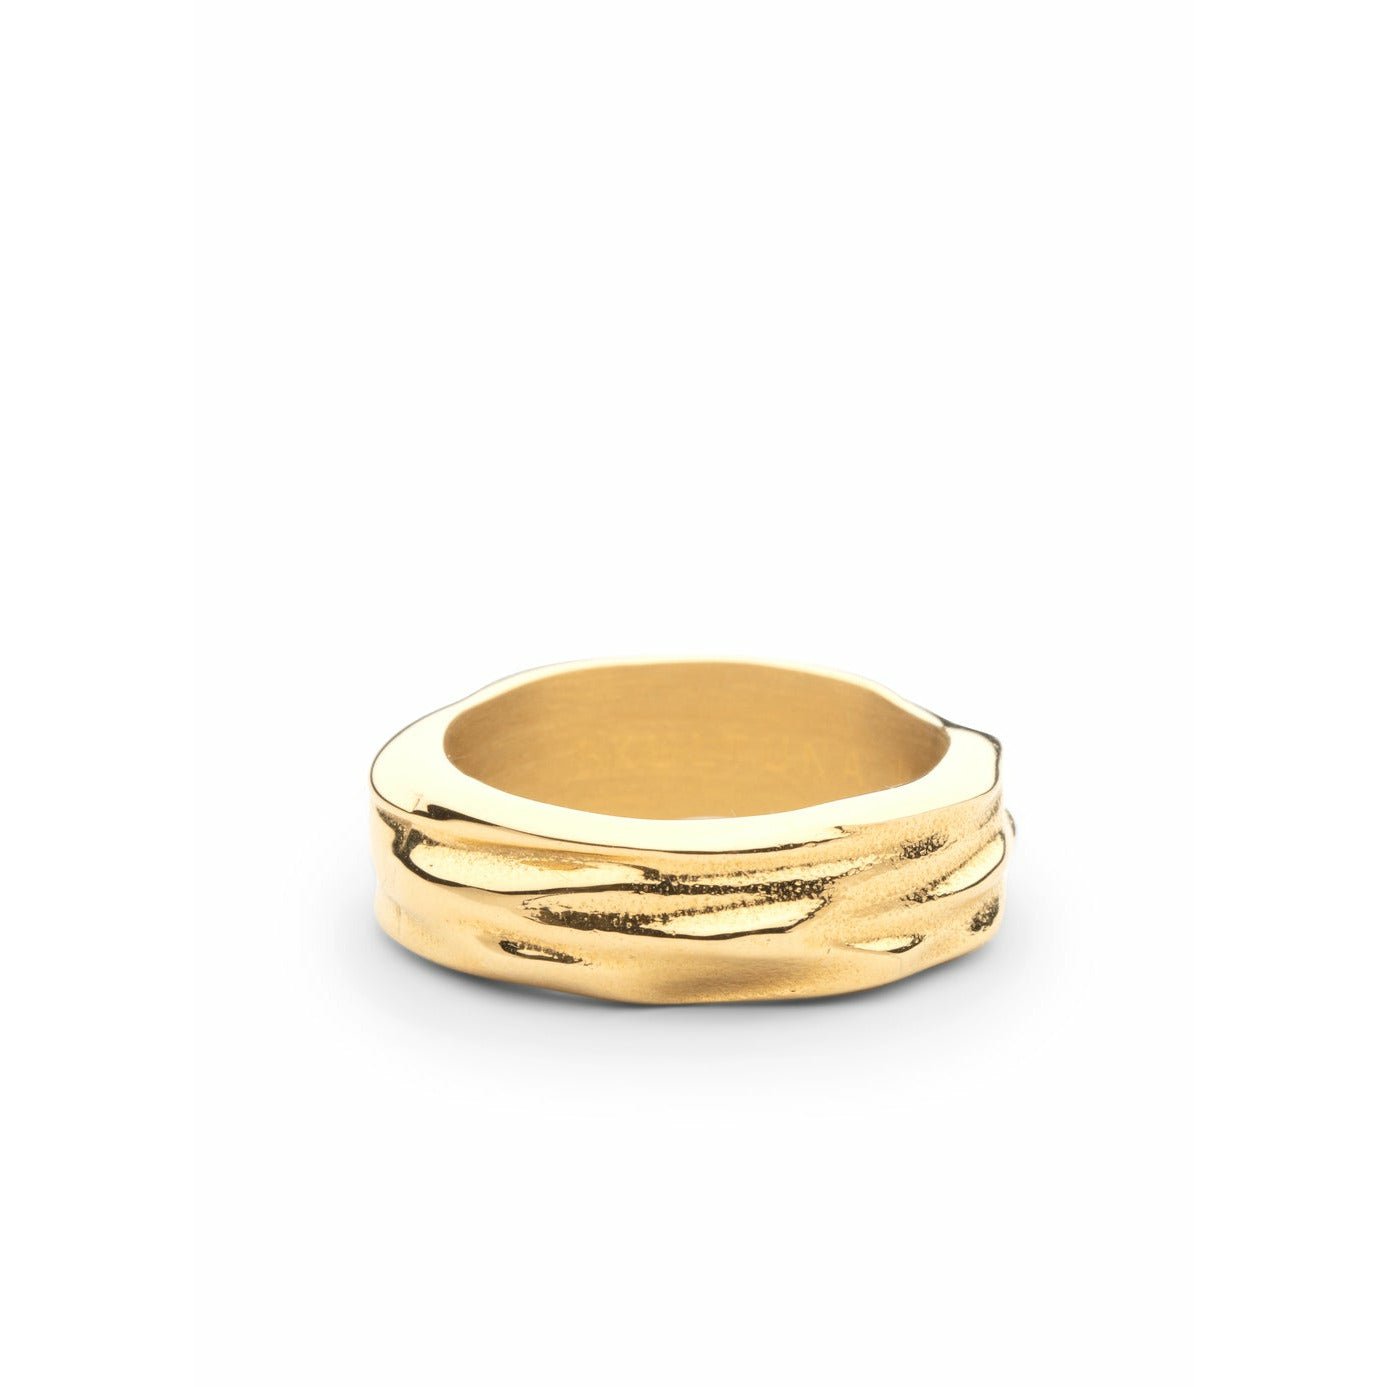 Skultuna objets opaques anneau épais petit matt or, Ø1,6 cm